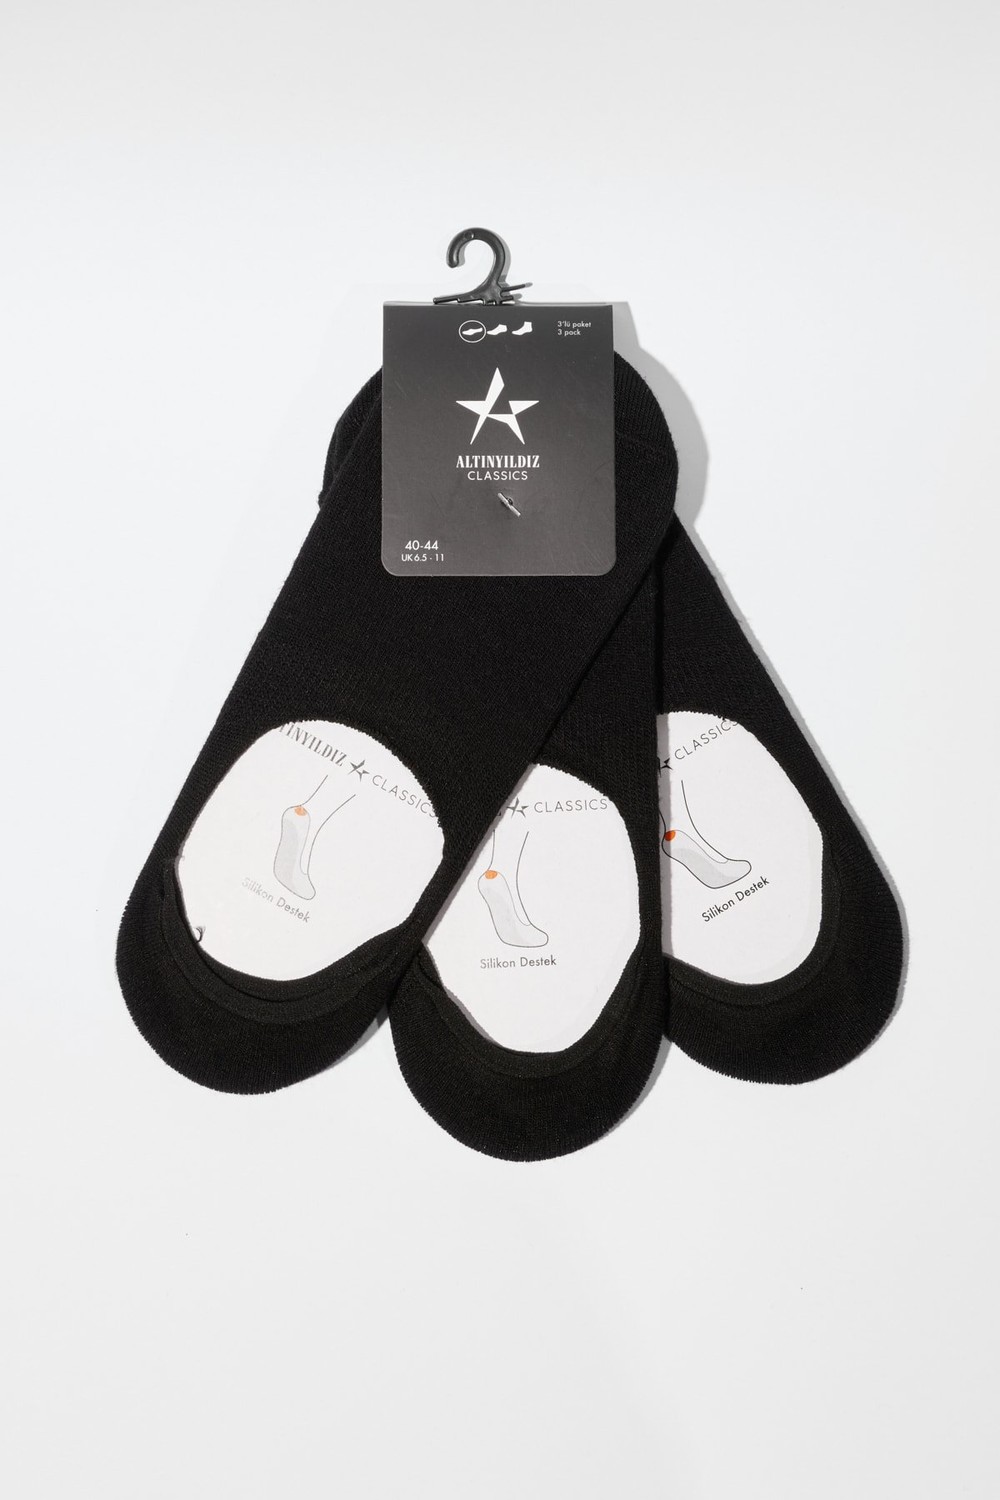 ALTINYILDIZ CLASSICS Men's Black 3-packs Flat Ballerina Socks